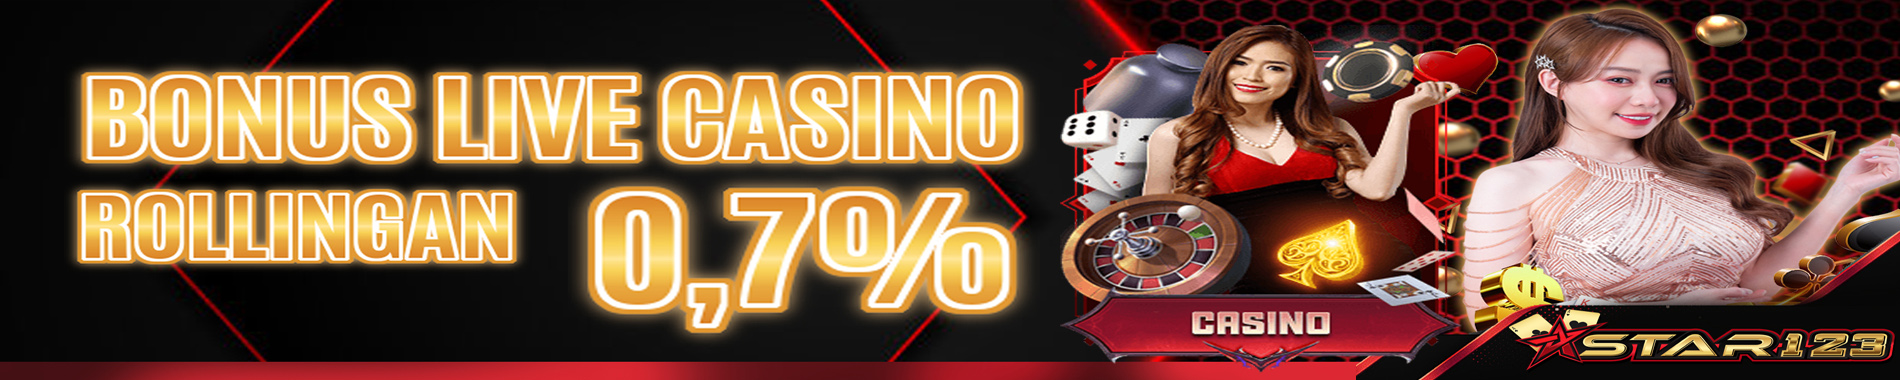 star123 bonus casino online